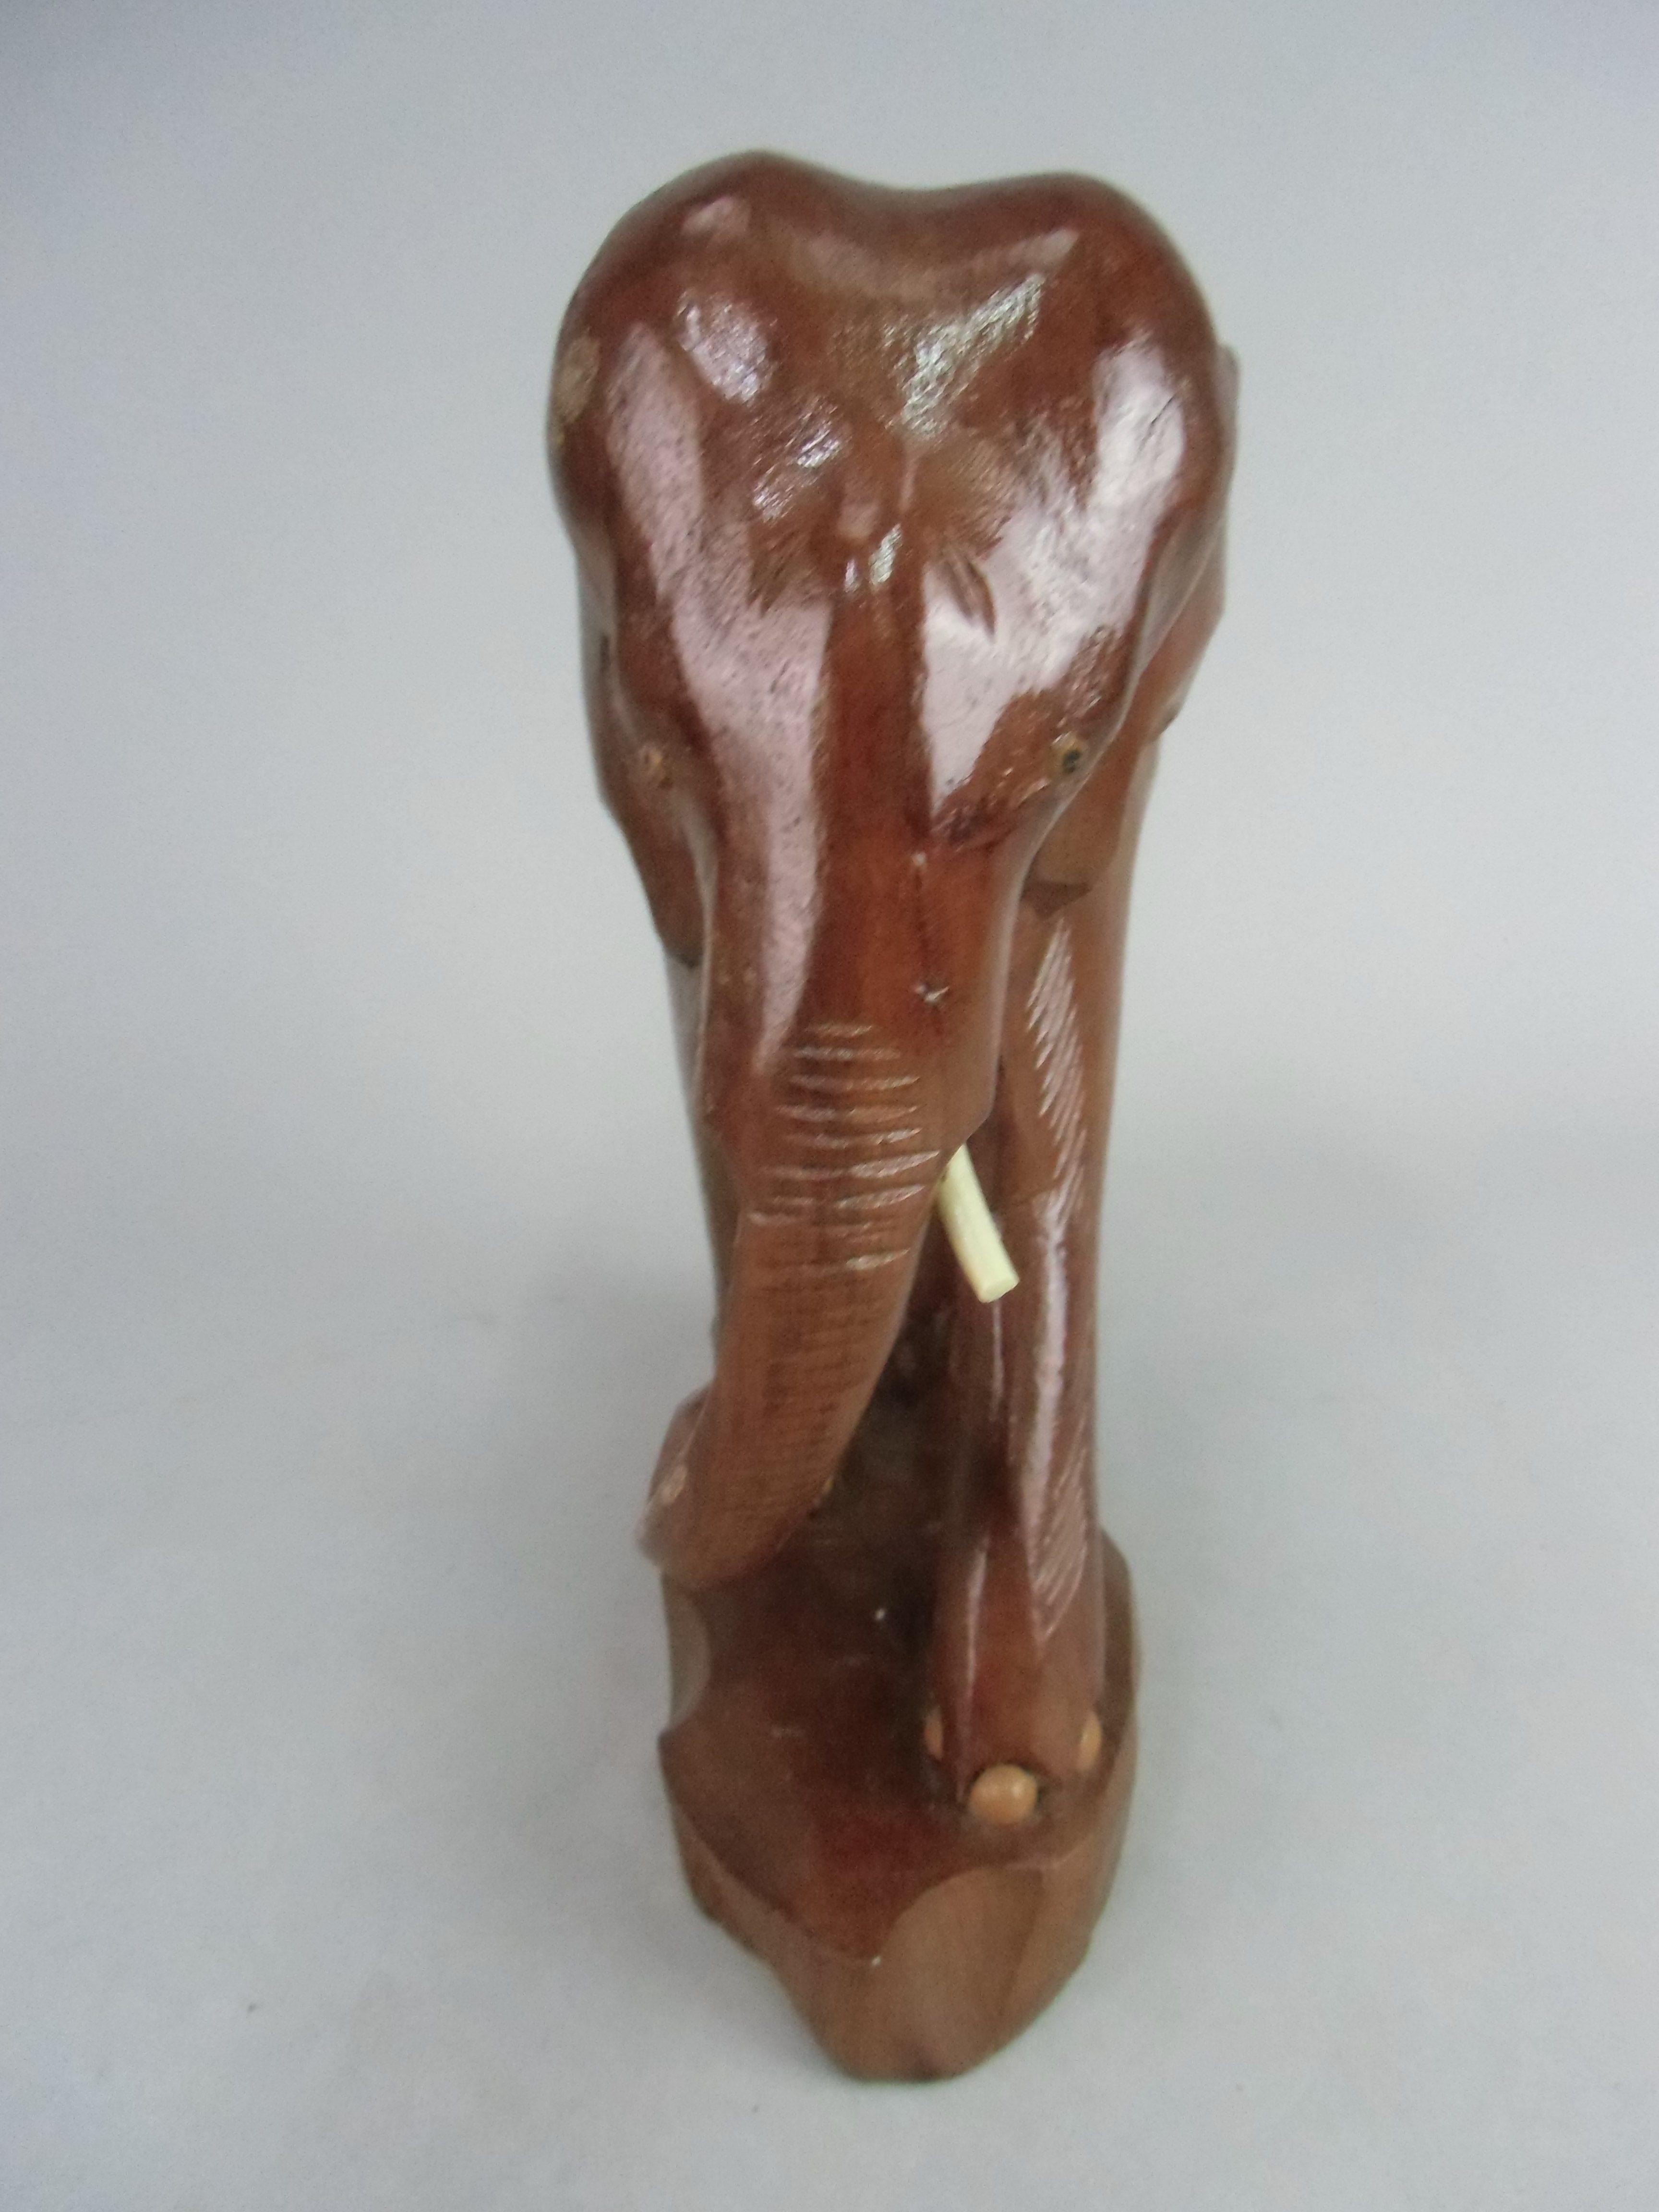 Japanese Wooden Elephant Statue Brown Walking Carving Brown Vtg Okimono BD336